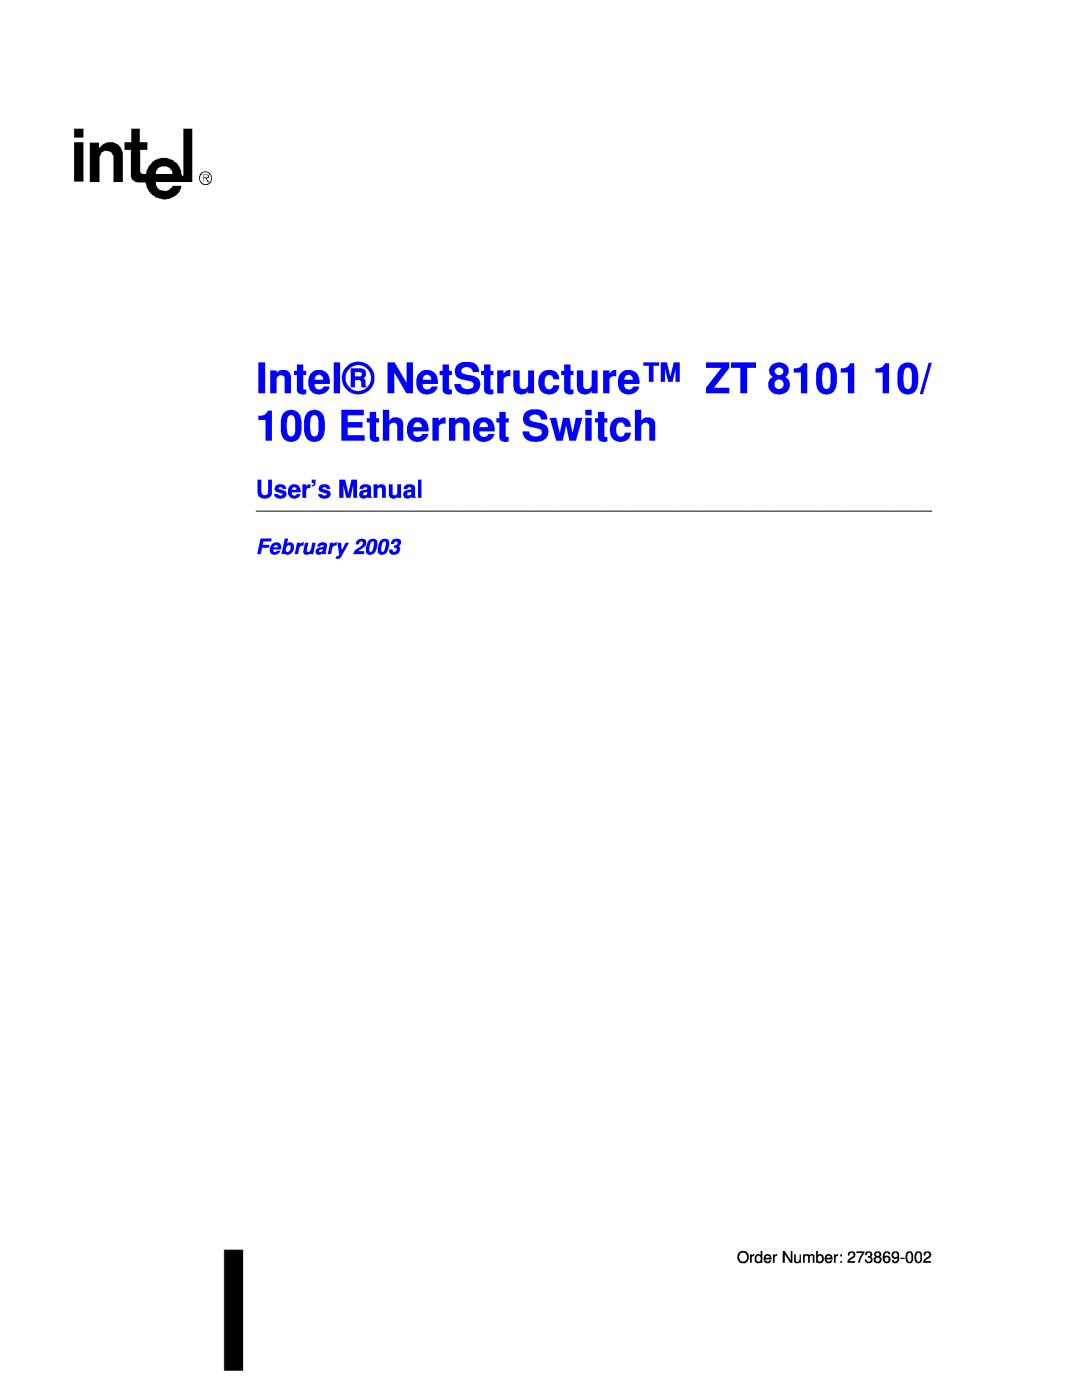 Intel ZT 8101 10/100 user manual User’s Manual, February 